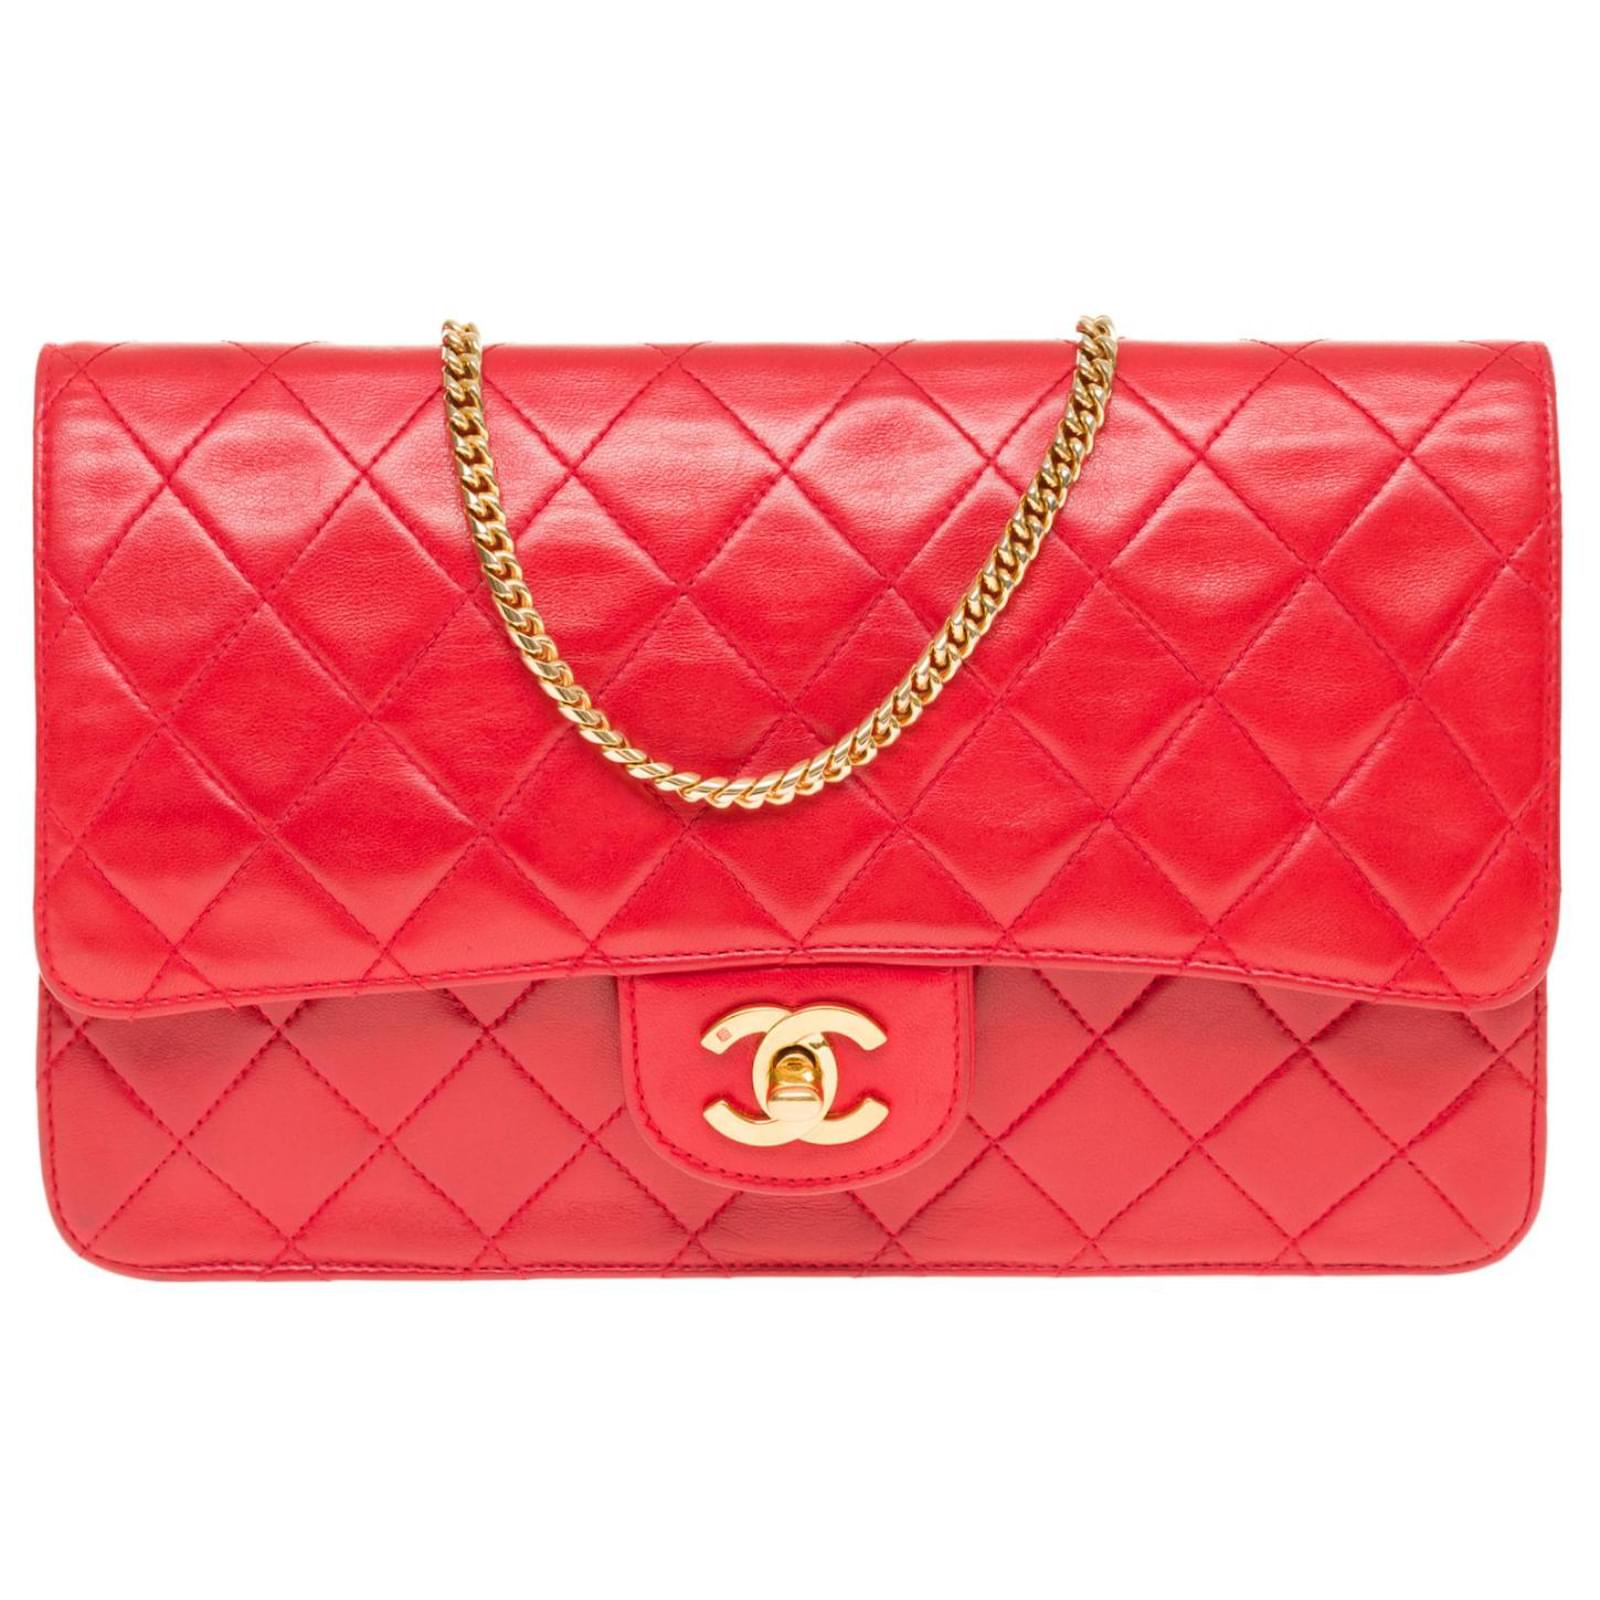 red chanel handbags